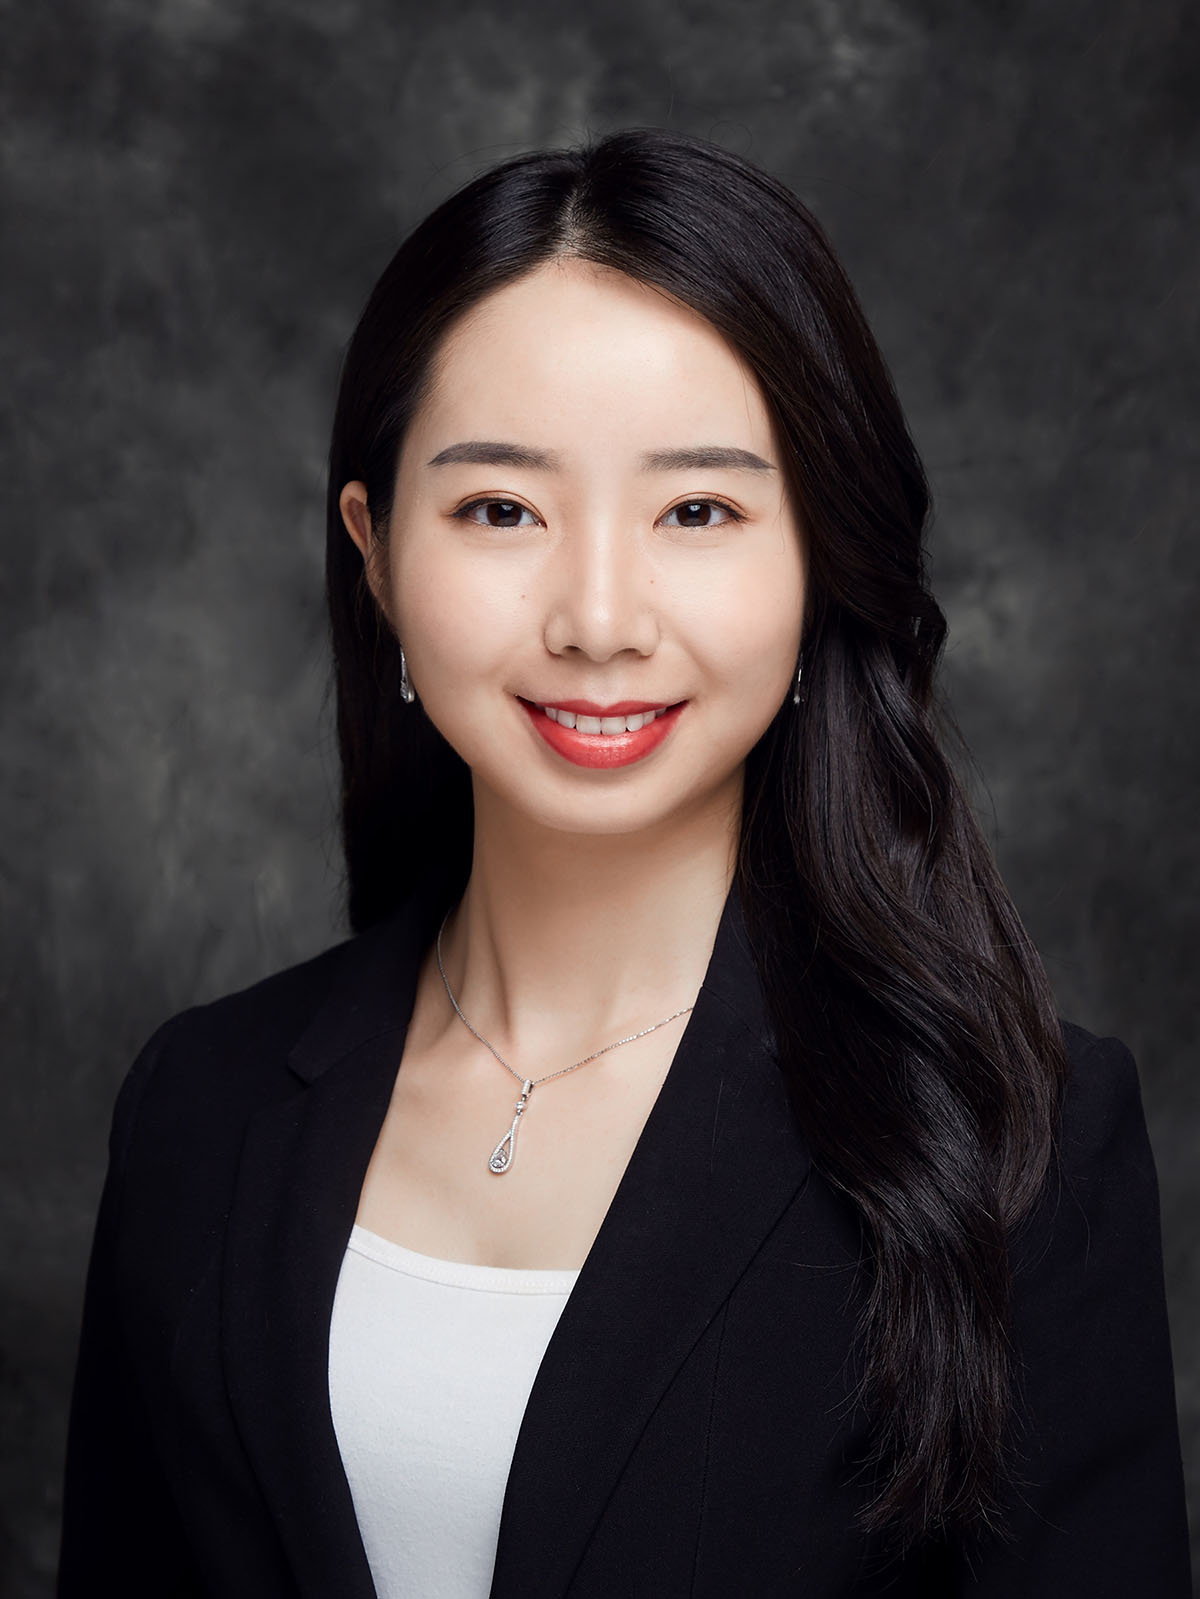 Jinghan Zhu smiling in a dark blazer and white shirt